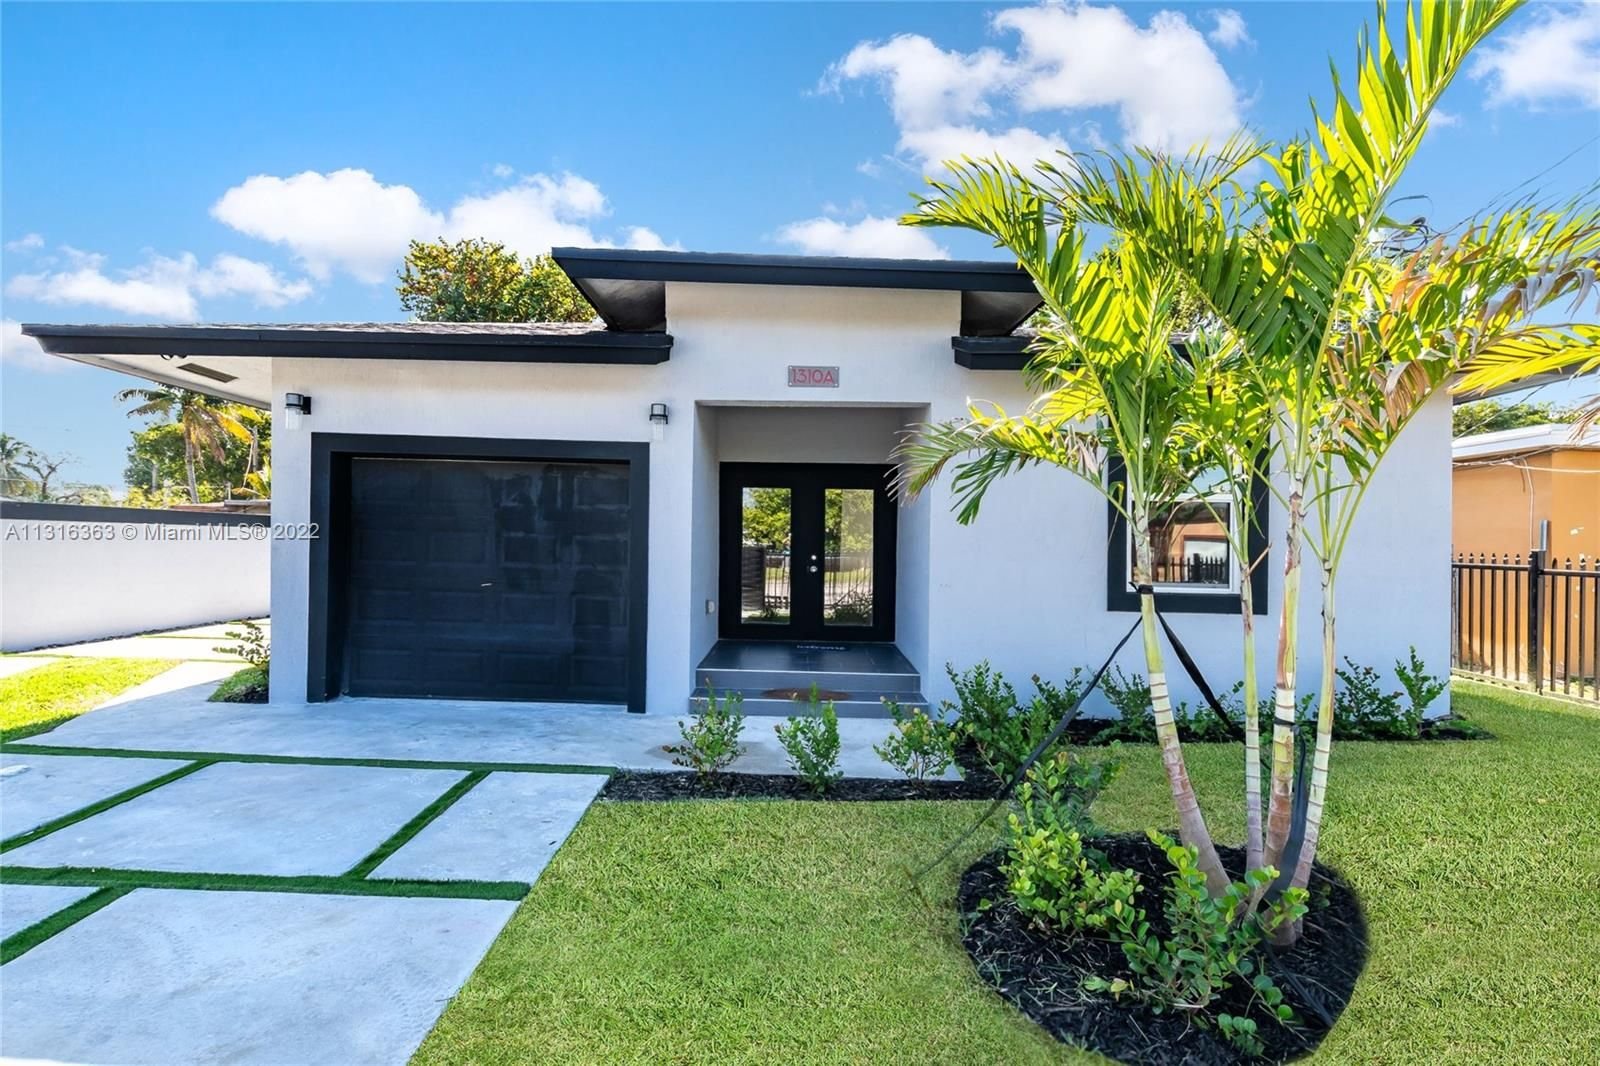 Real estate property located at 1310 55th Ter, Miami-Dade County, Miami, FL